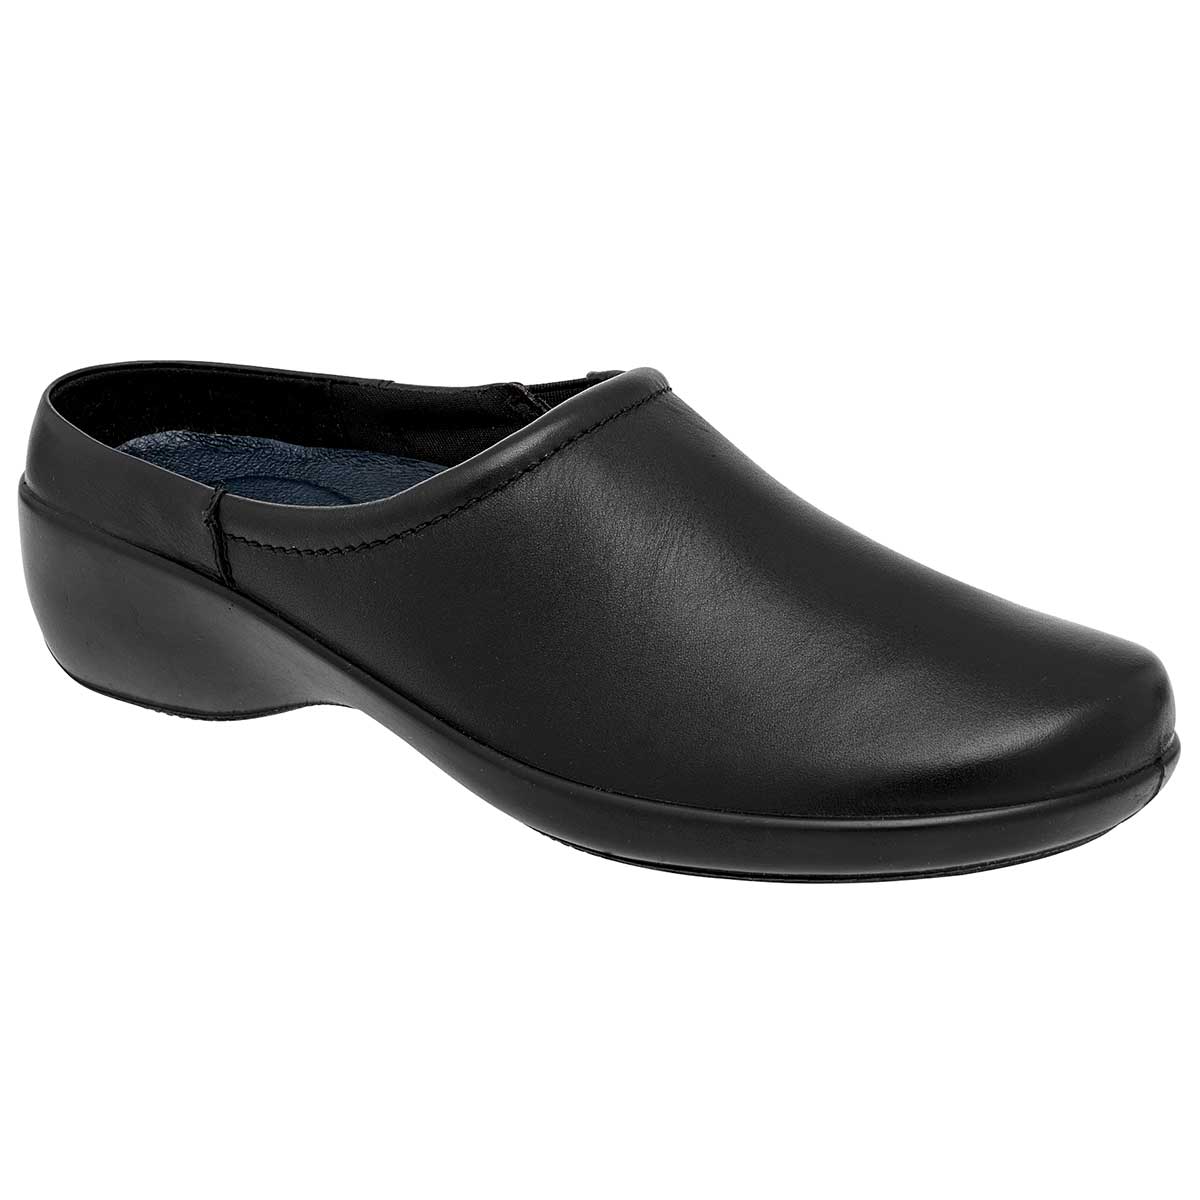 Pakar.com - Mayo: Regalos para mamá | Zapato especializado para mujer cod-116291